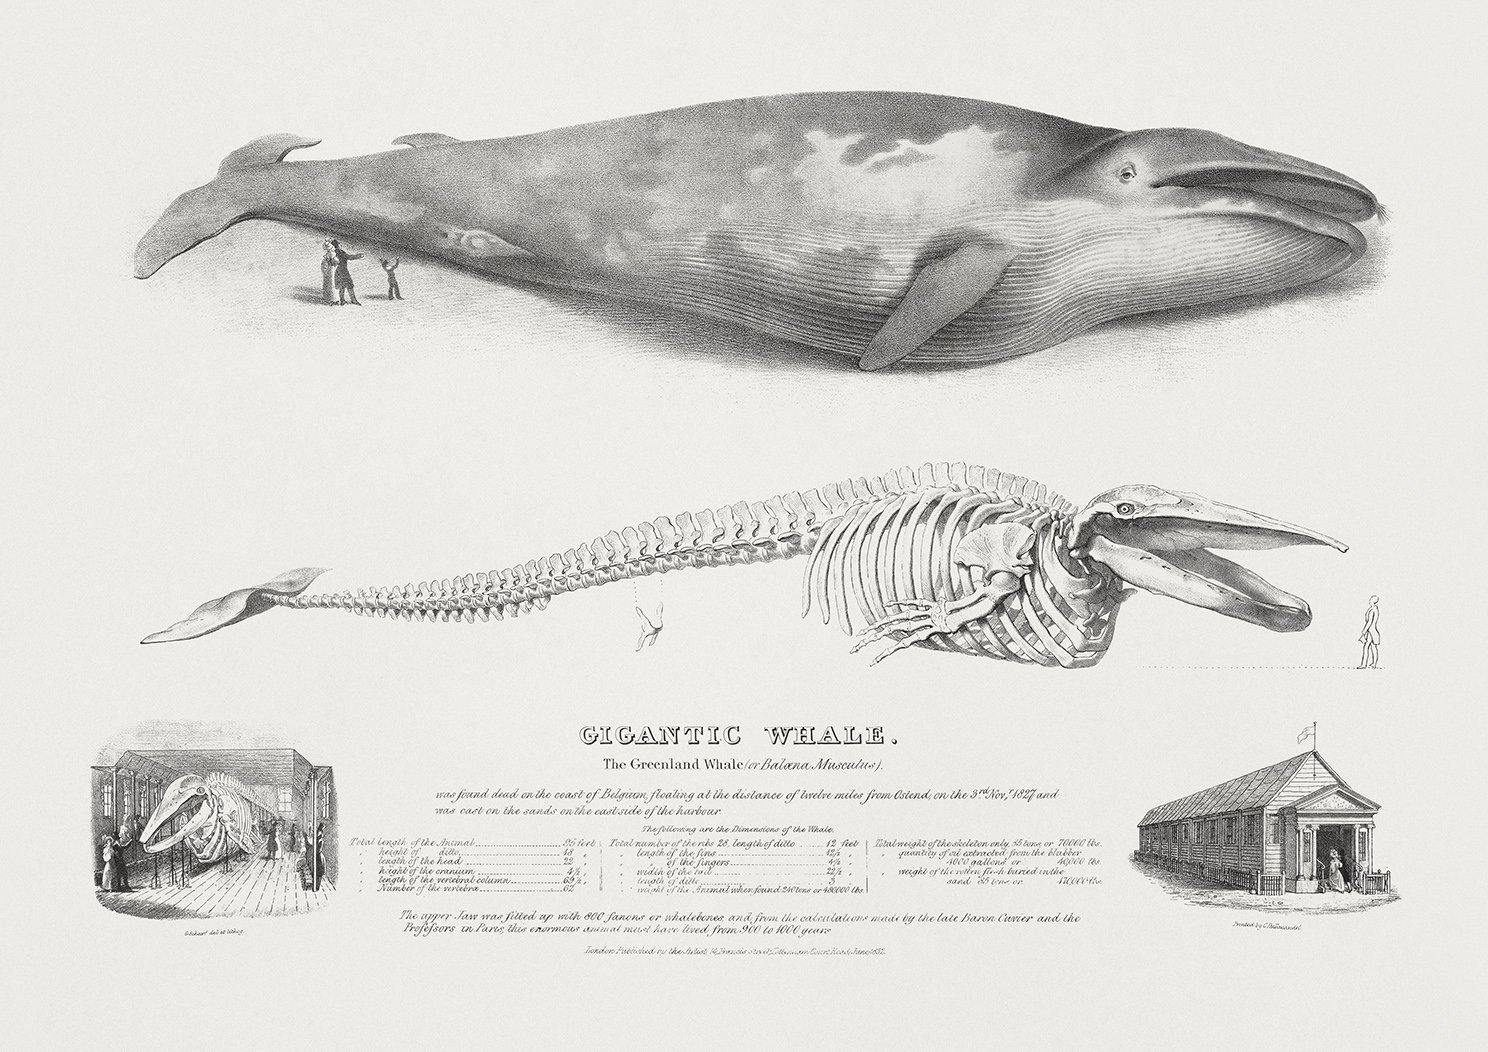 BLUE WHALE PRINT: Vintage Whale Anatomy Art Illustration - Pimlico Prints